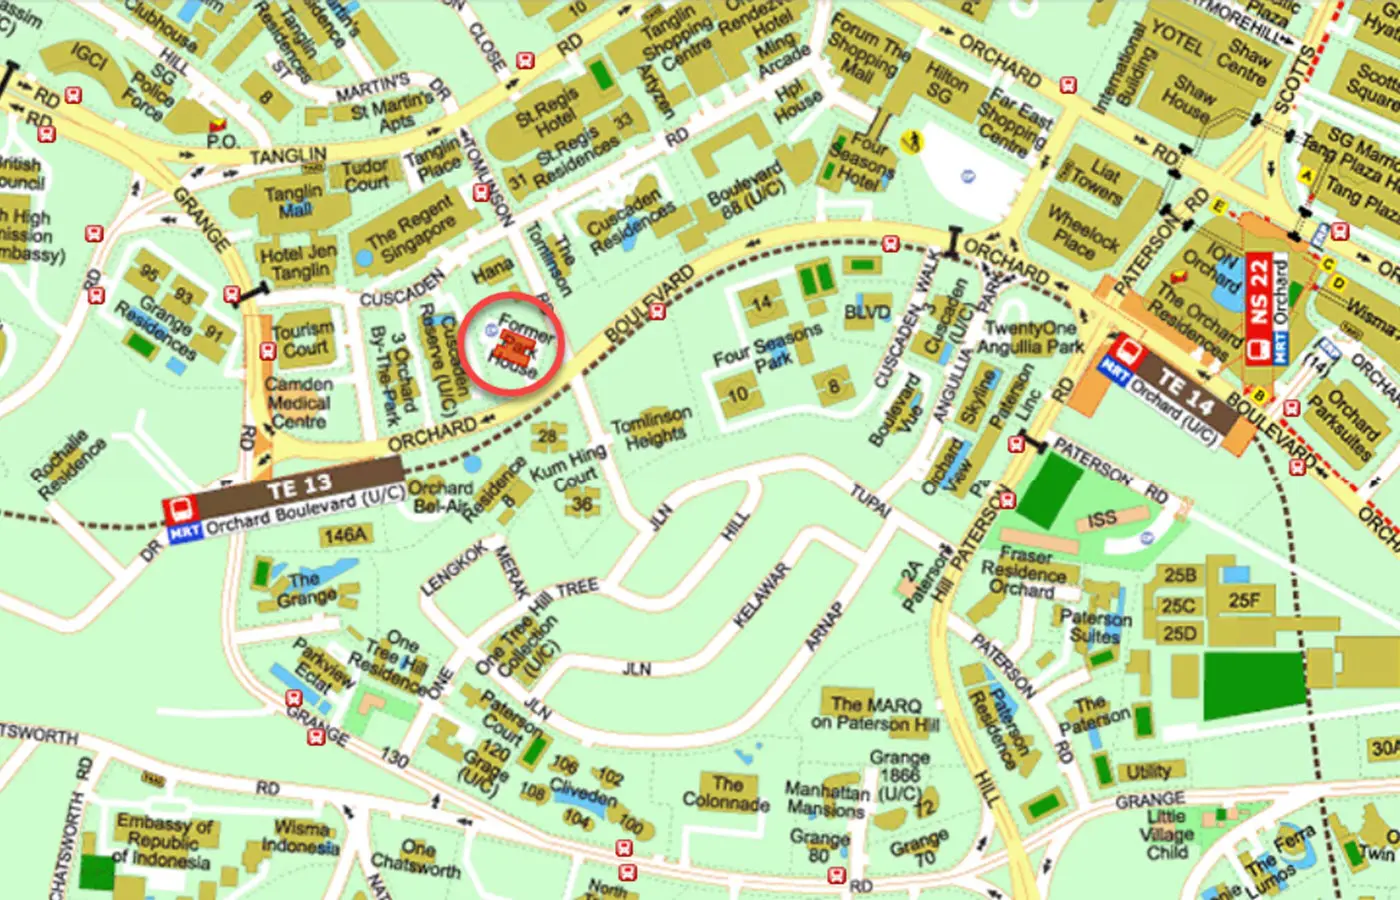 Park Nova Condo Location - Street Directory Map